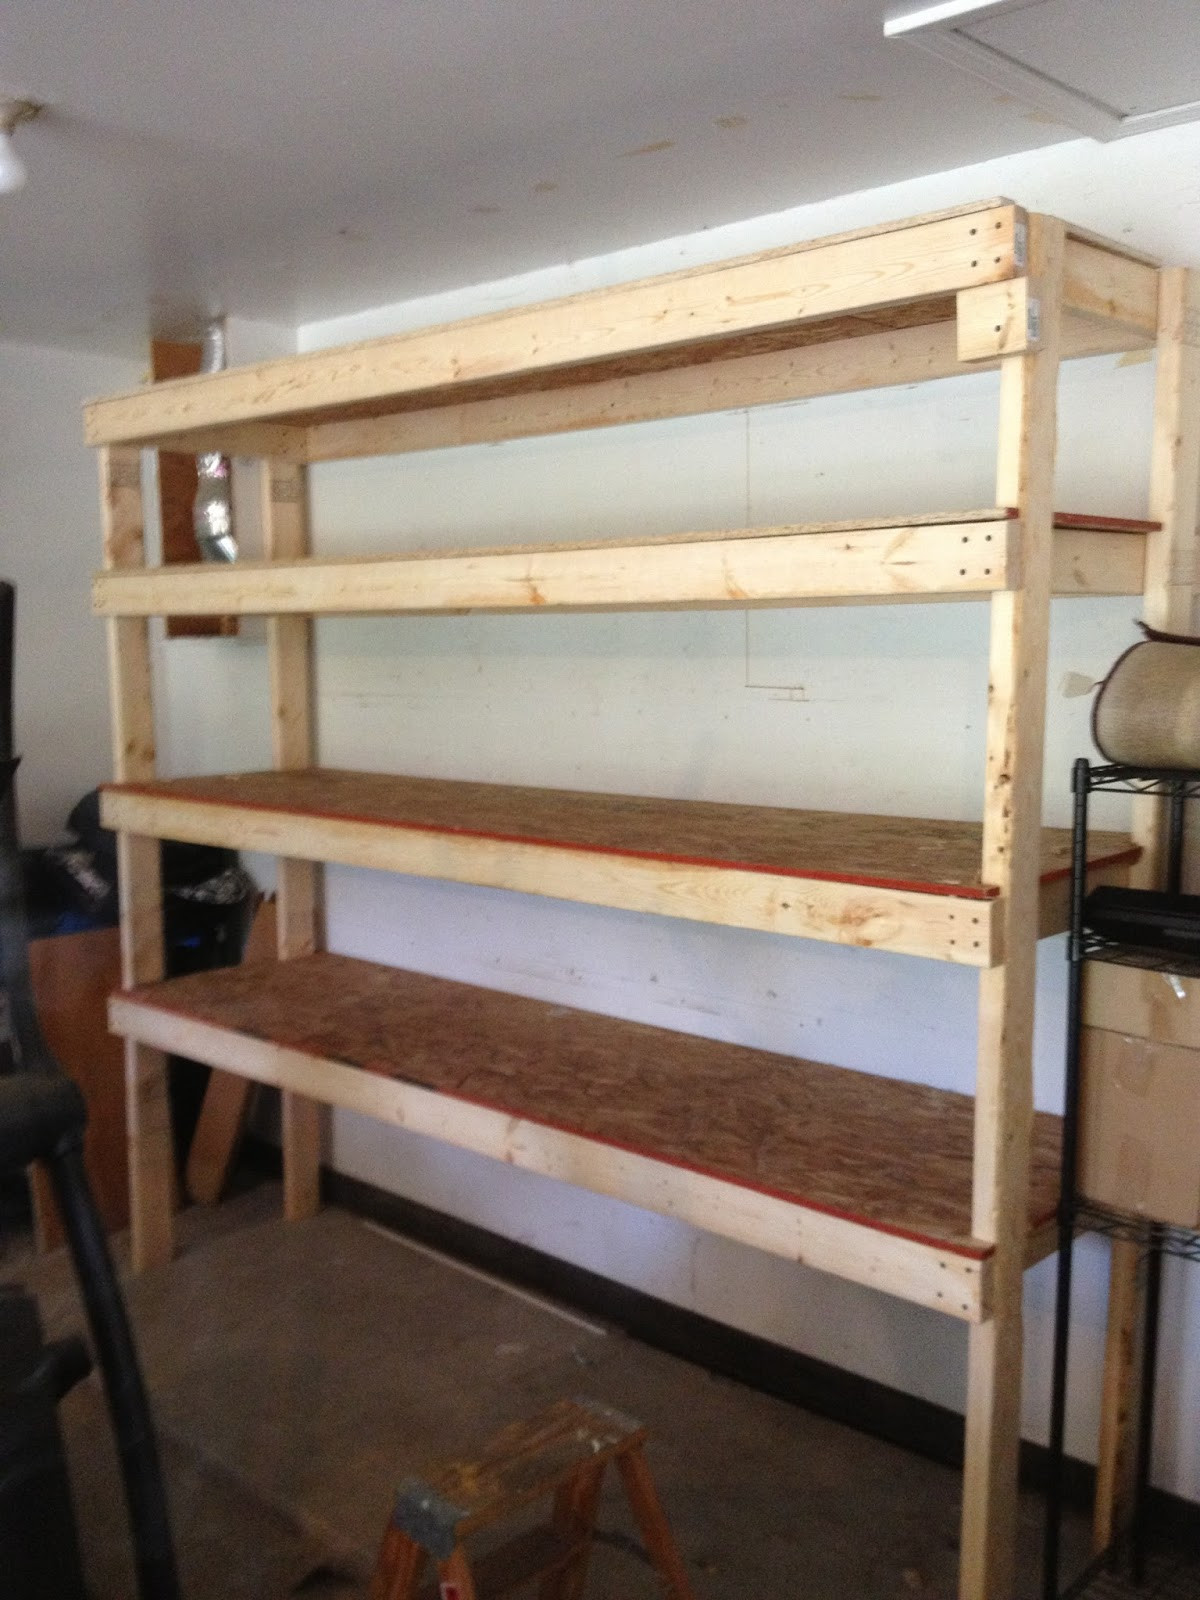 Best ideas about Garage Storage Shelves
. Save or Pin 20 DIY Garage Shelving Ideas Now.